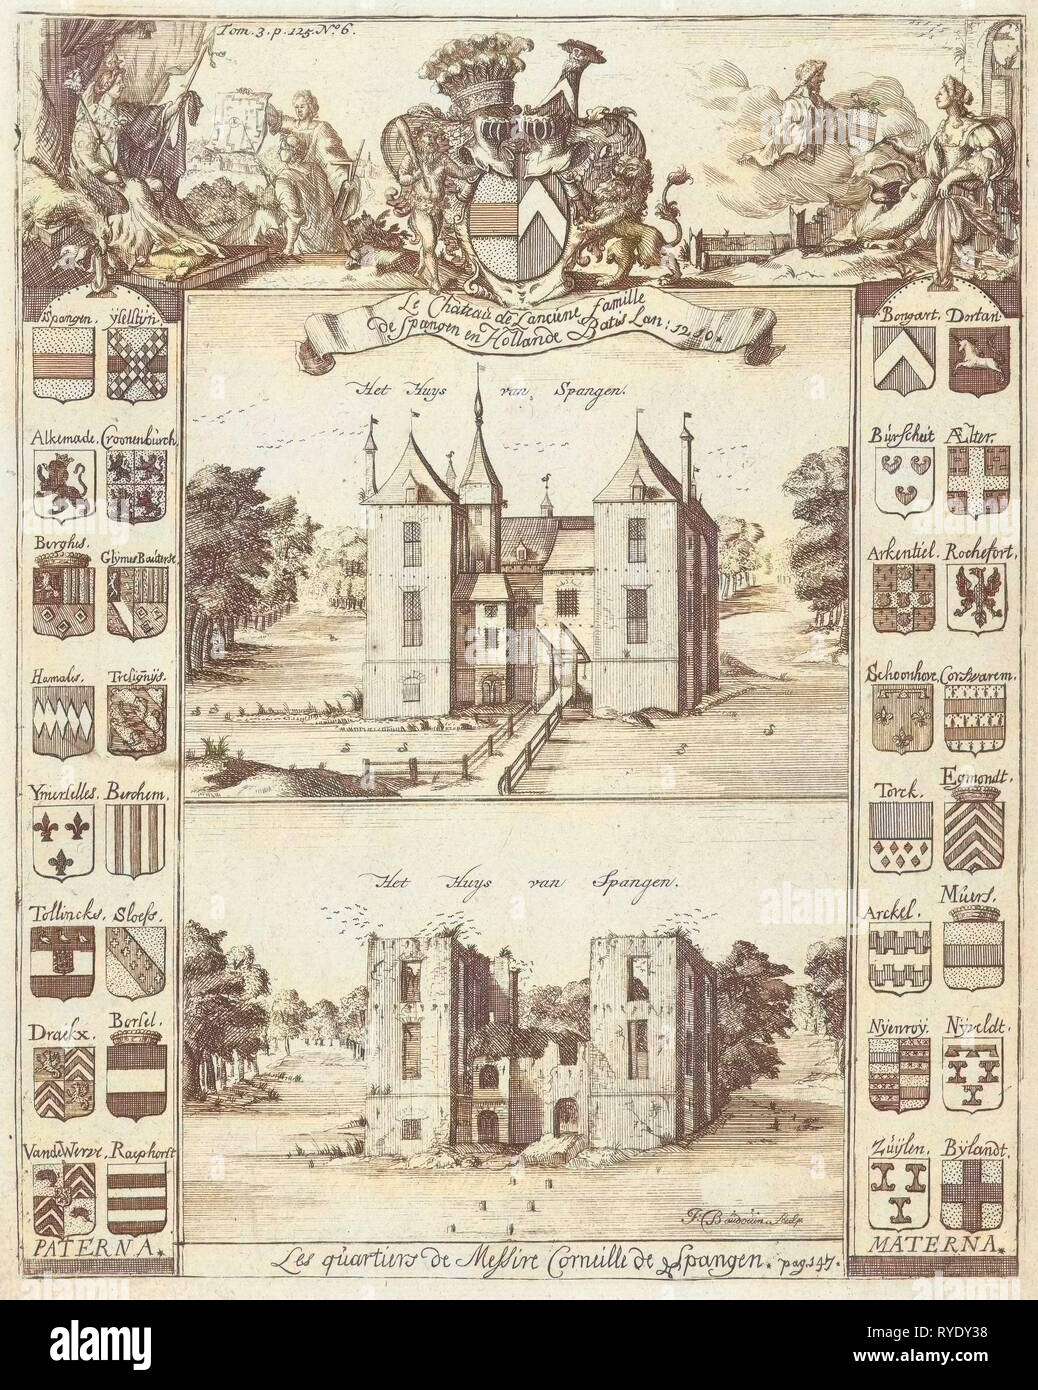 Casa di Spangen, Paesi Bassi, I. Baudouin, 1600 - 1650 Foto Stock